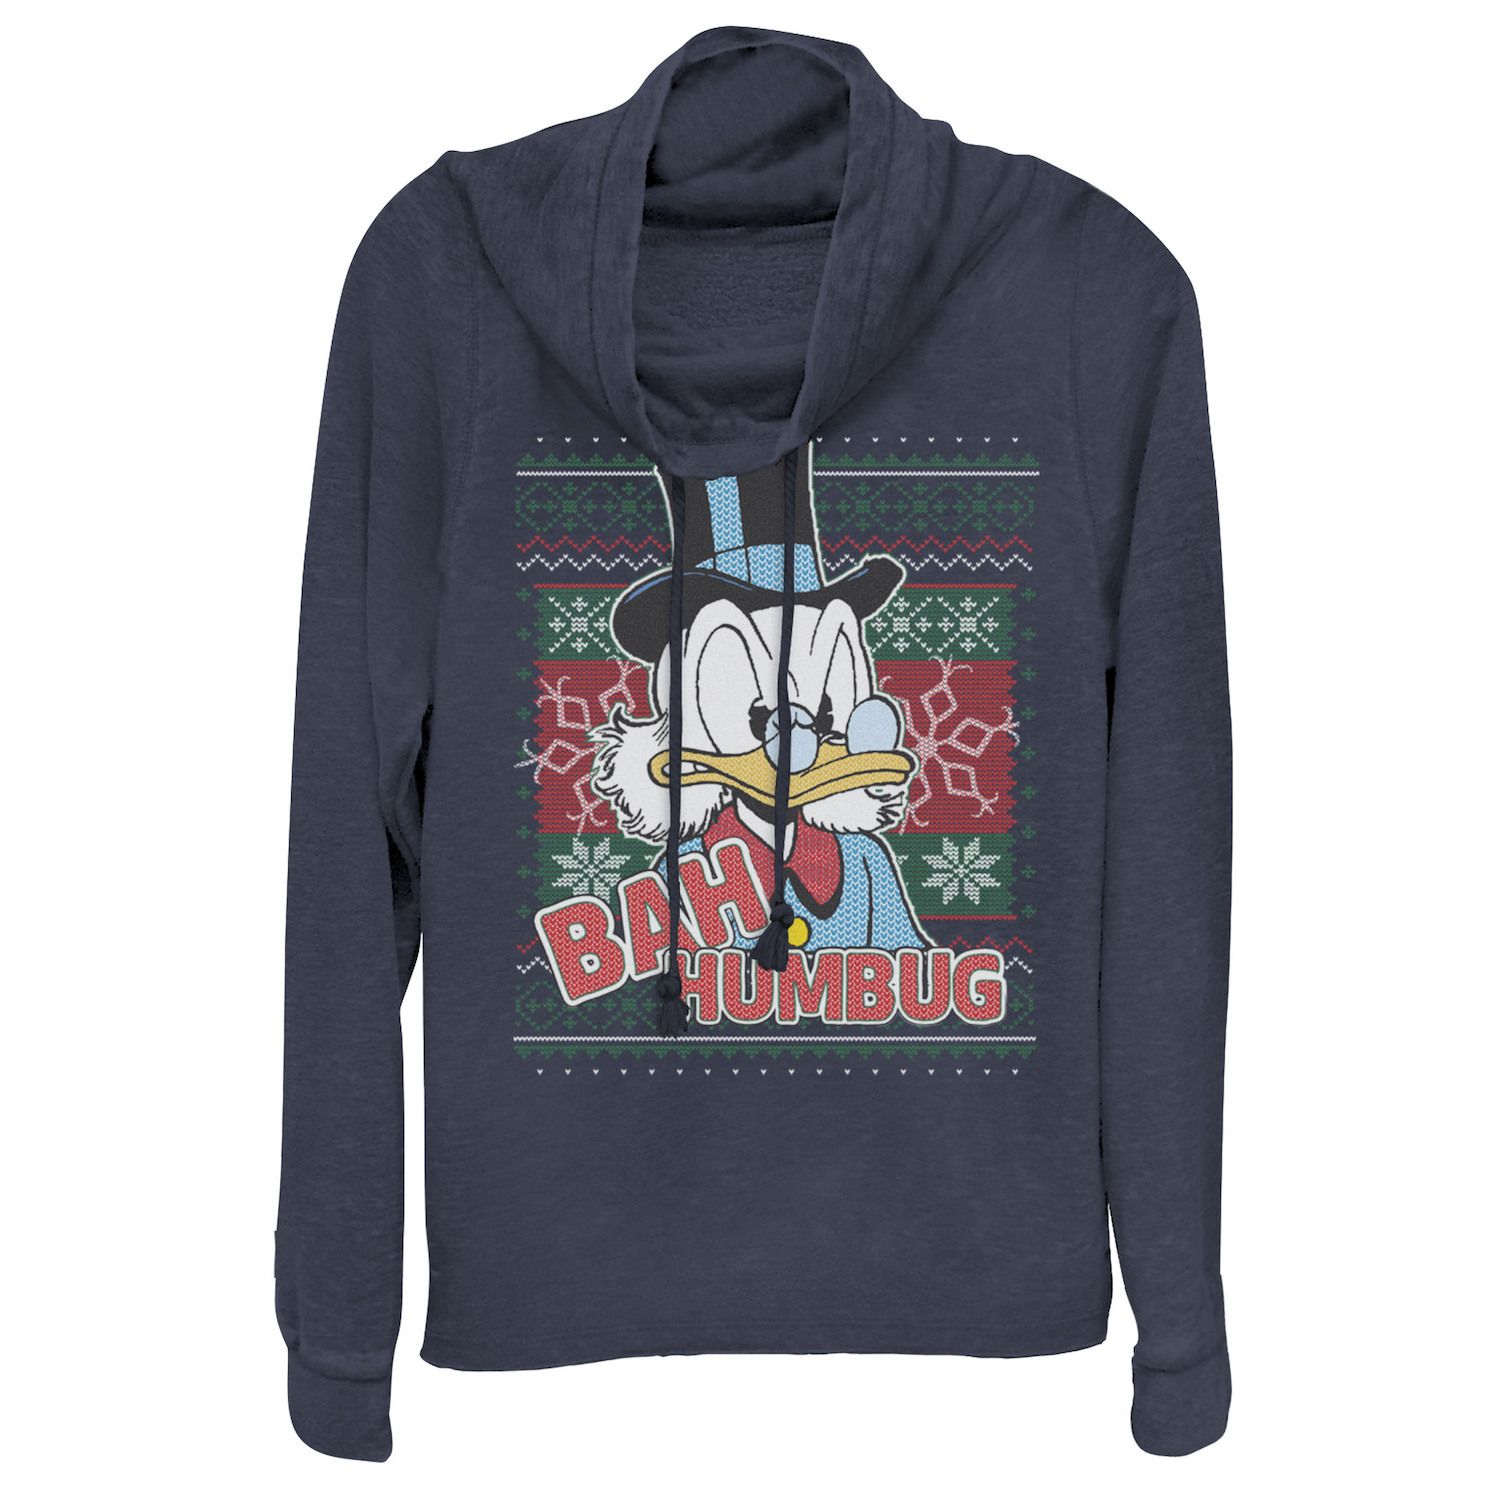 Рождественский свитер Bah Humbug Disney's Scrooge McDuck Juniors, пуловер с воротником-хомутом Licensed Character